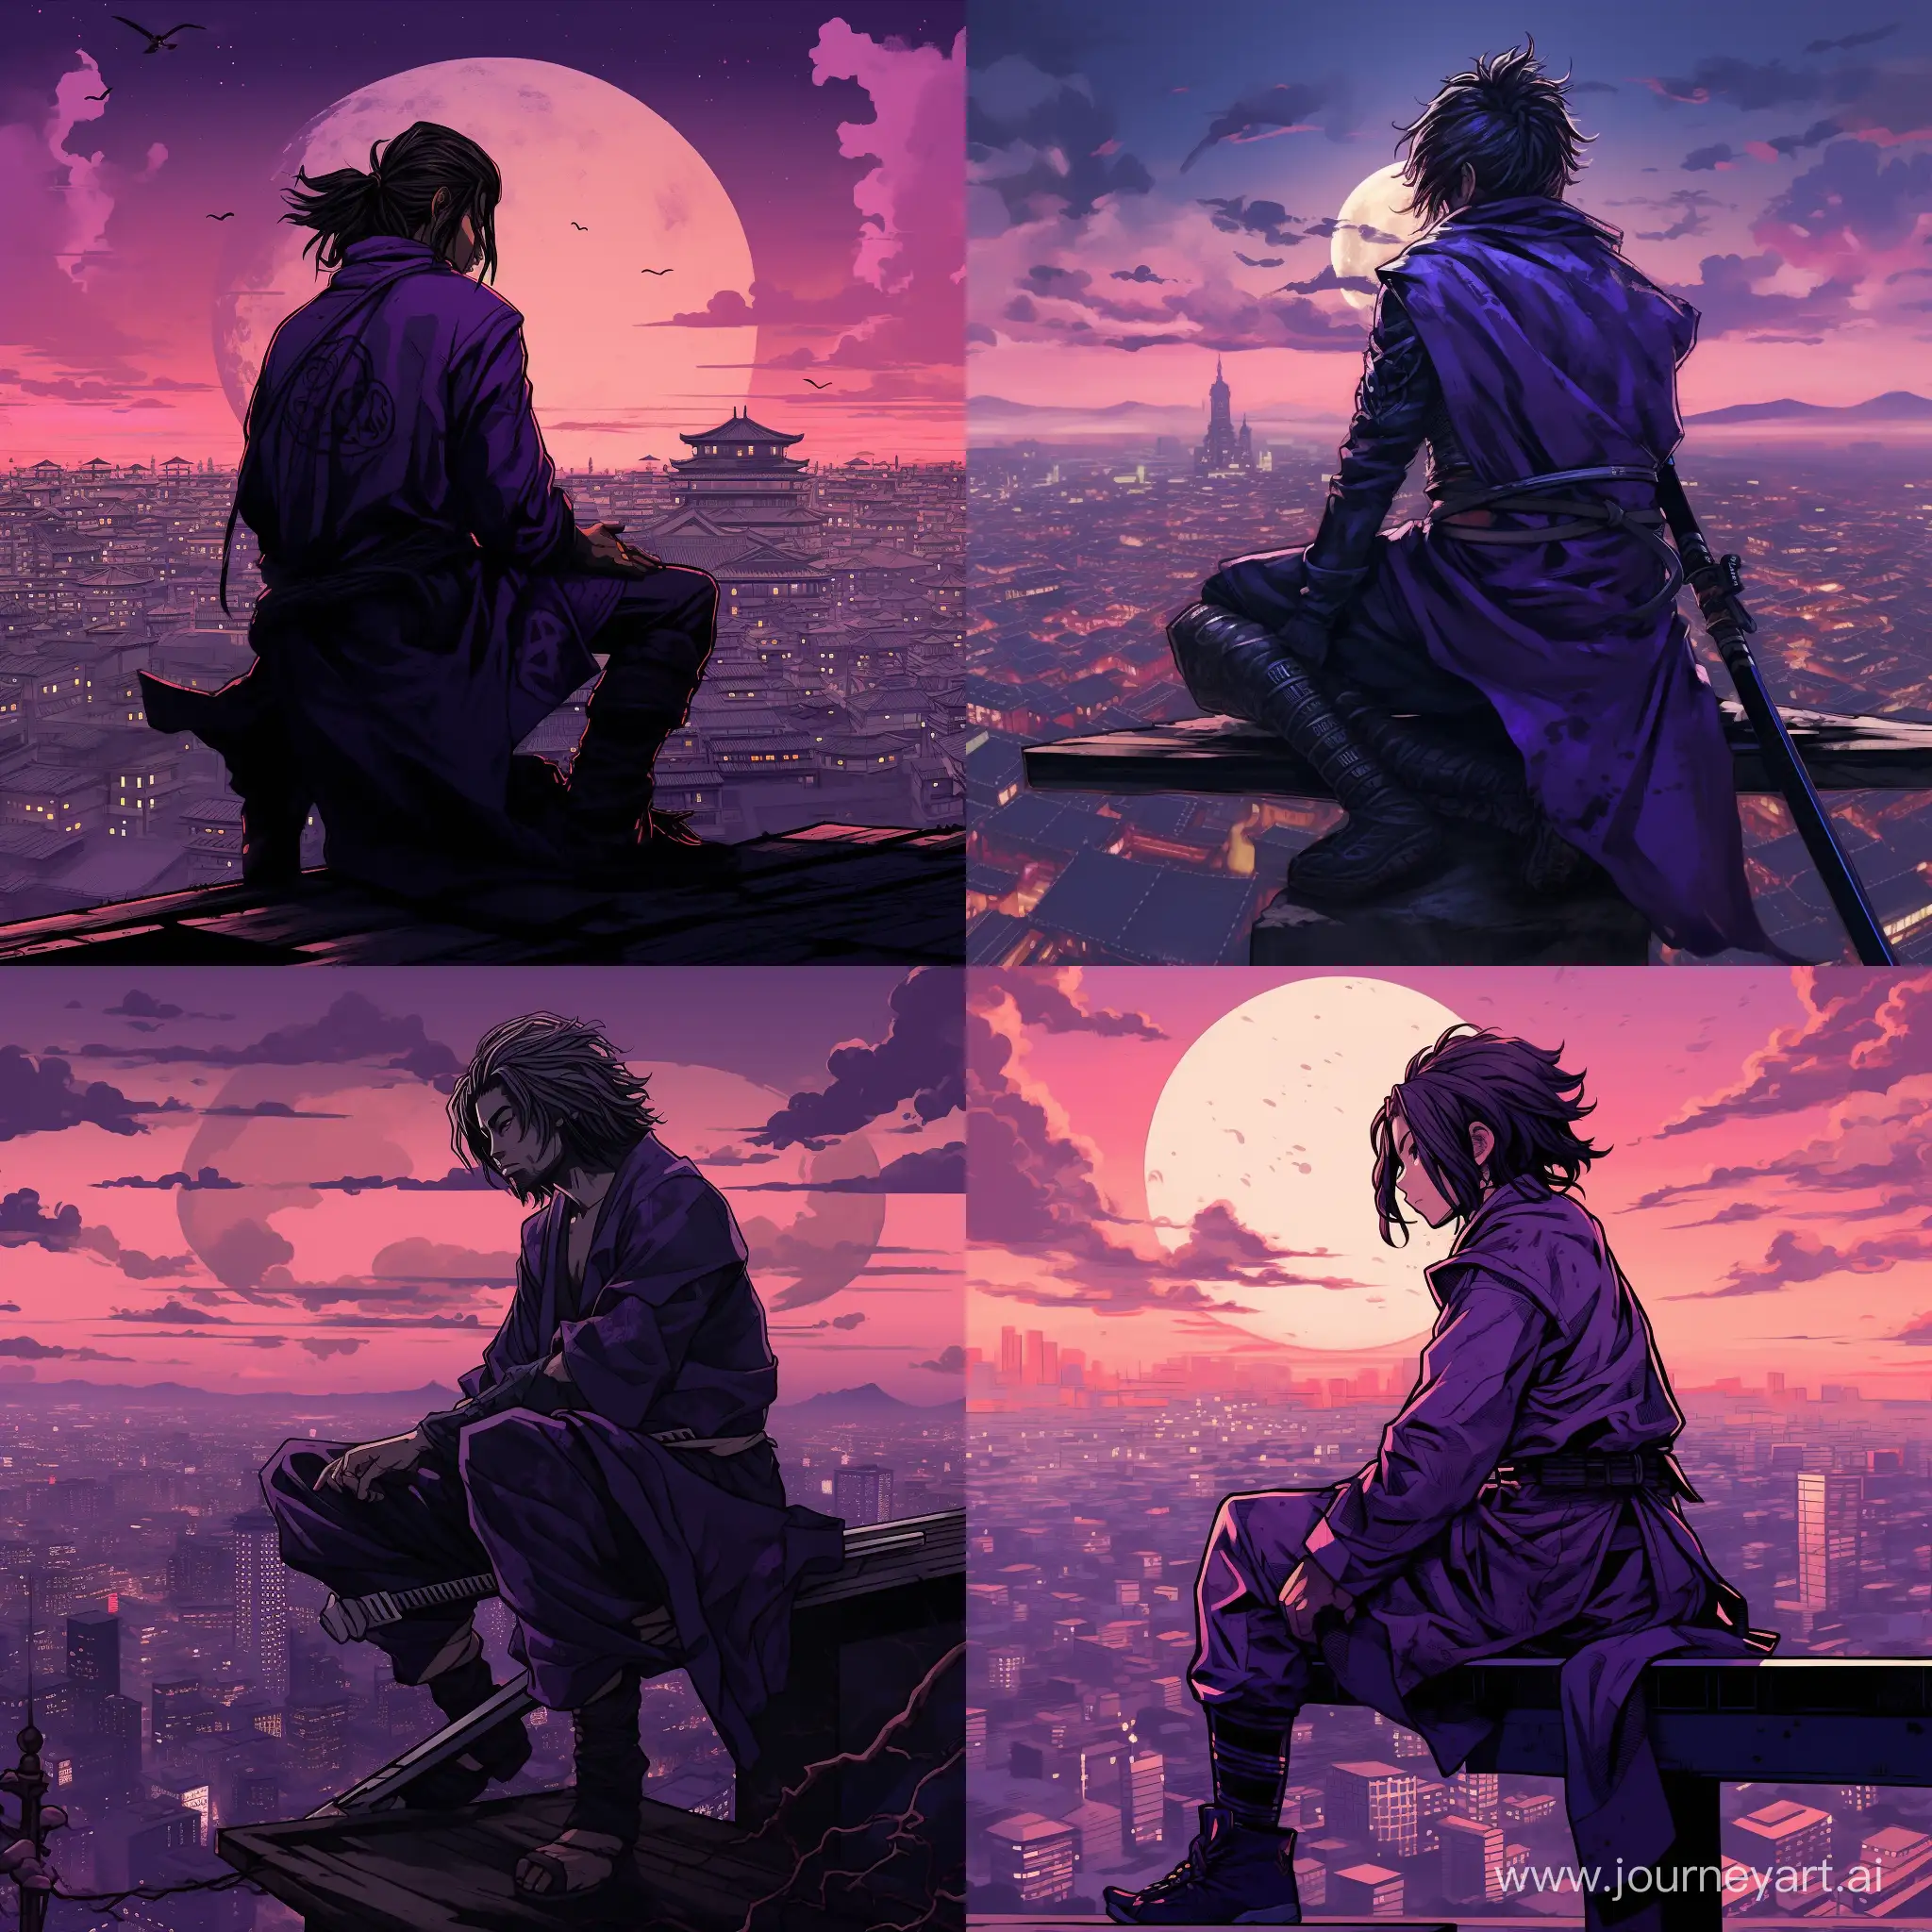 Urban-Samurai-Overlooking-Cityscape-in-Striking-Purple-and-Black-Tones